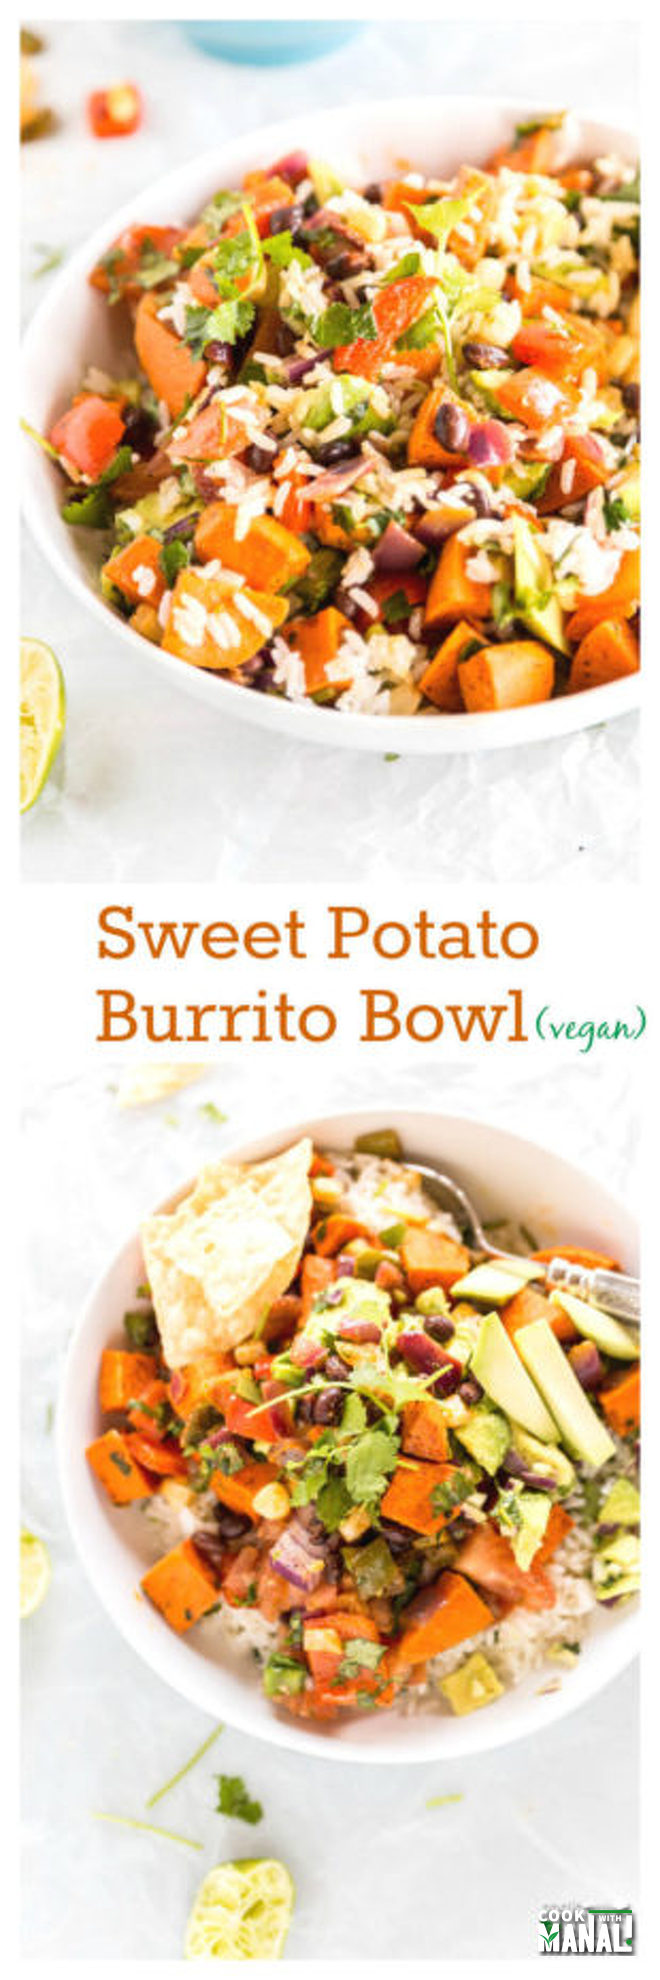 Sweet Potato Burrito Bowl - Cook With Manali